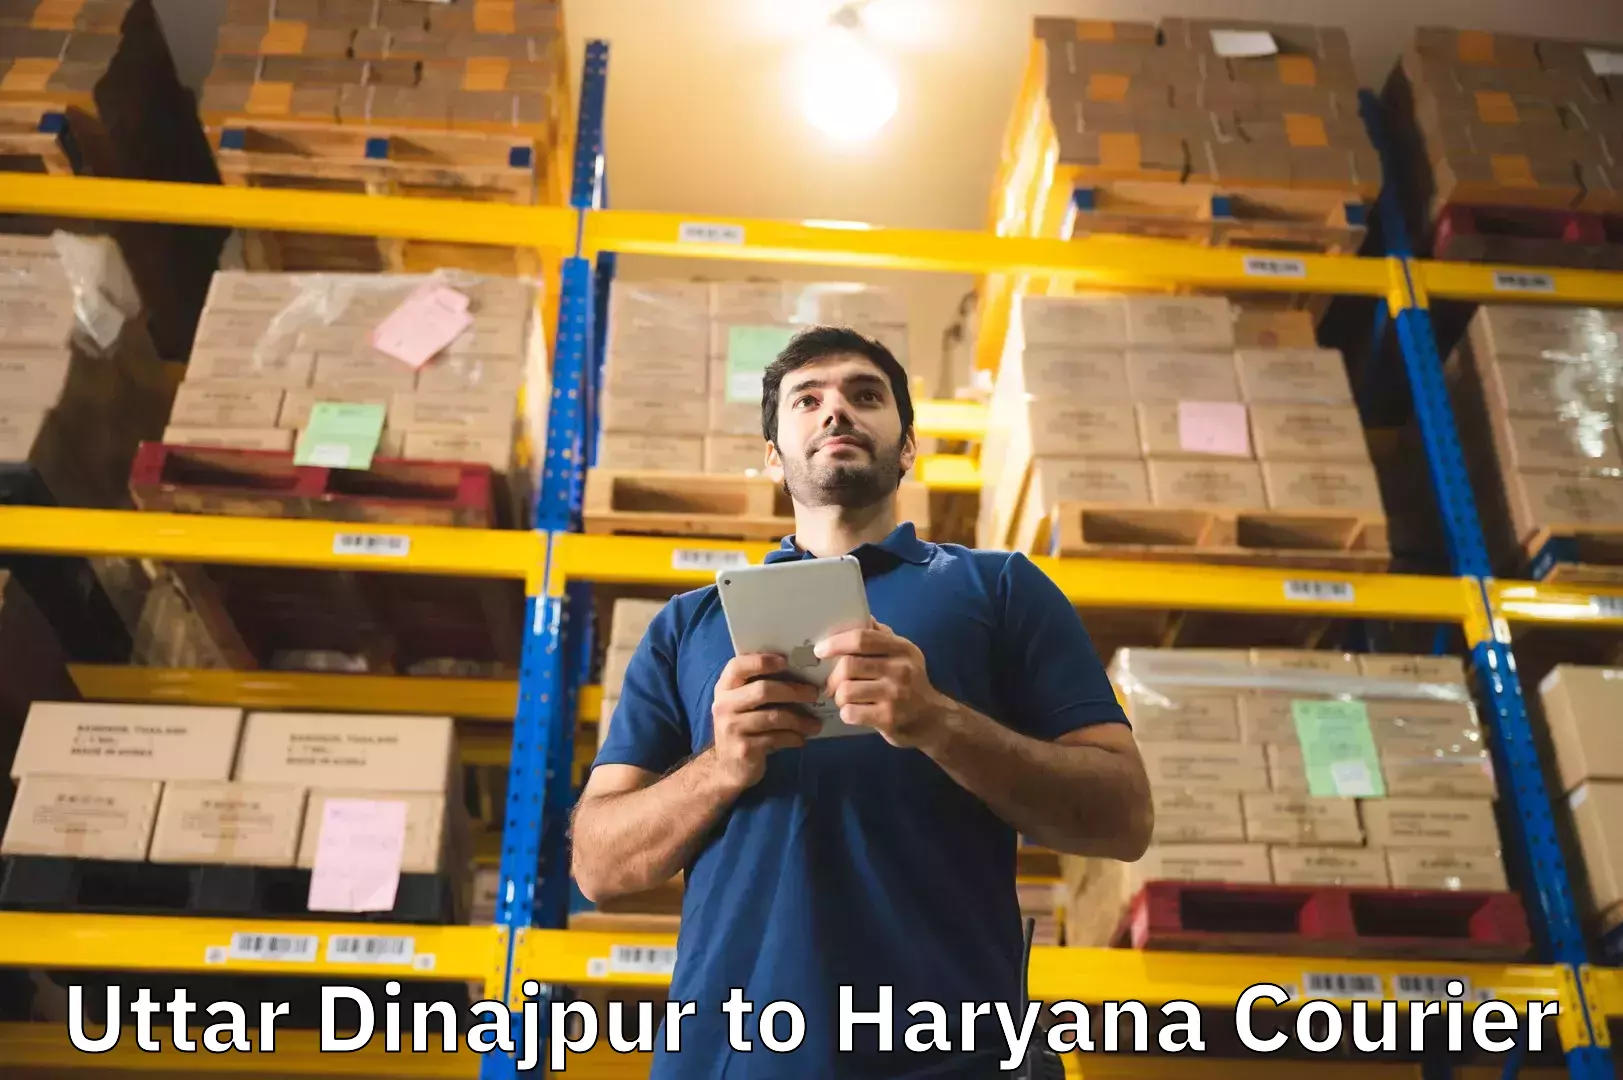 Luggage shipment specialists Uttar Dinajpur to Gurgaon